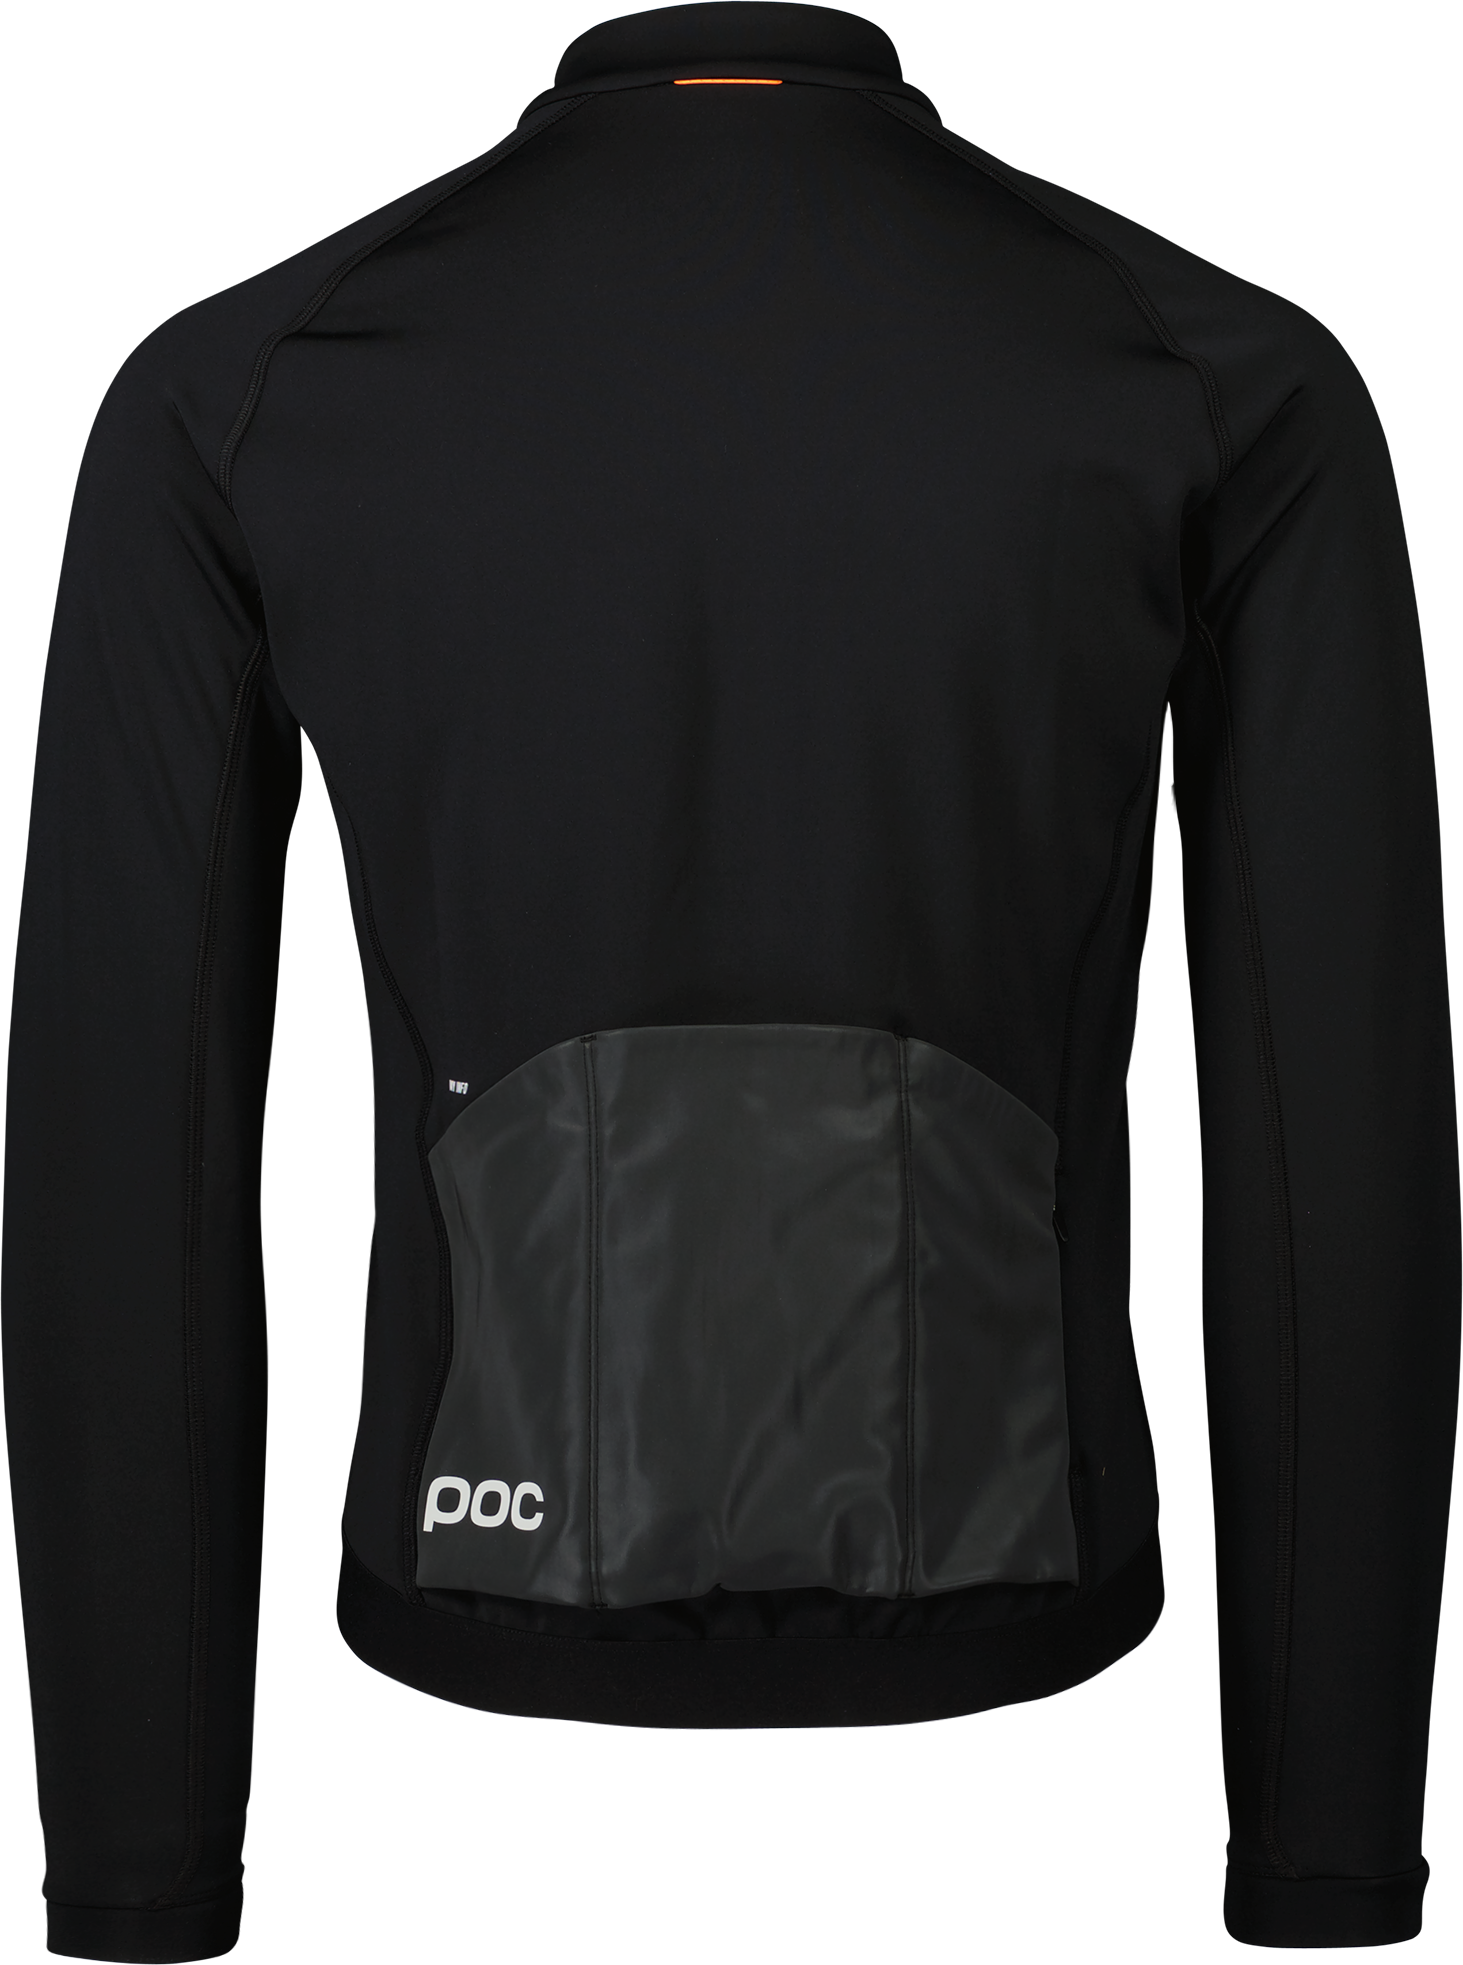 Black Leather Look Thermal Jacket